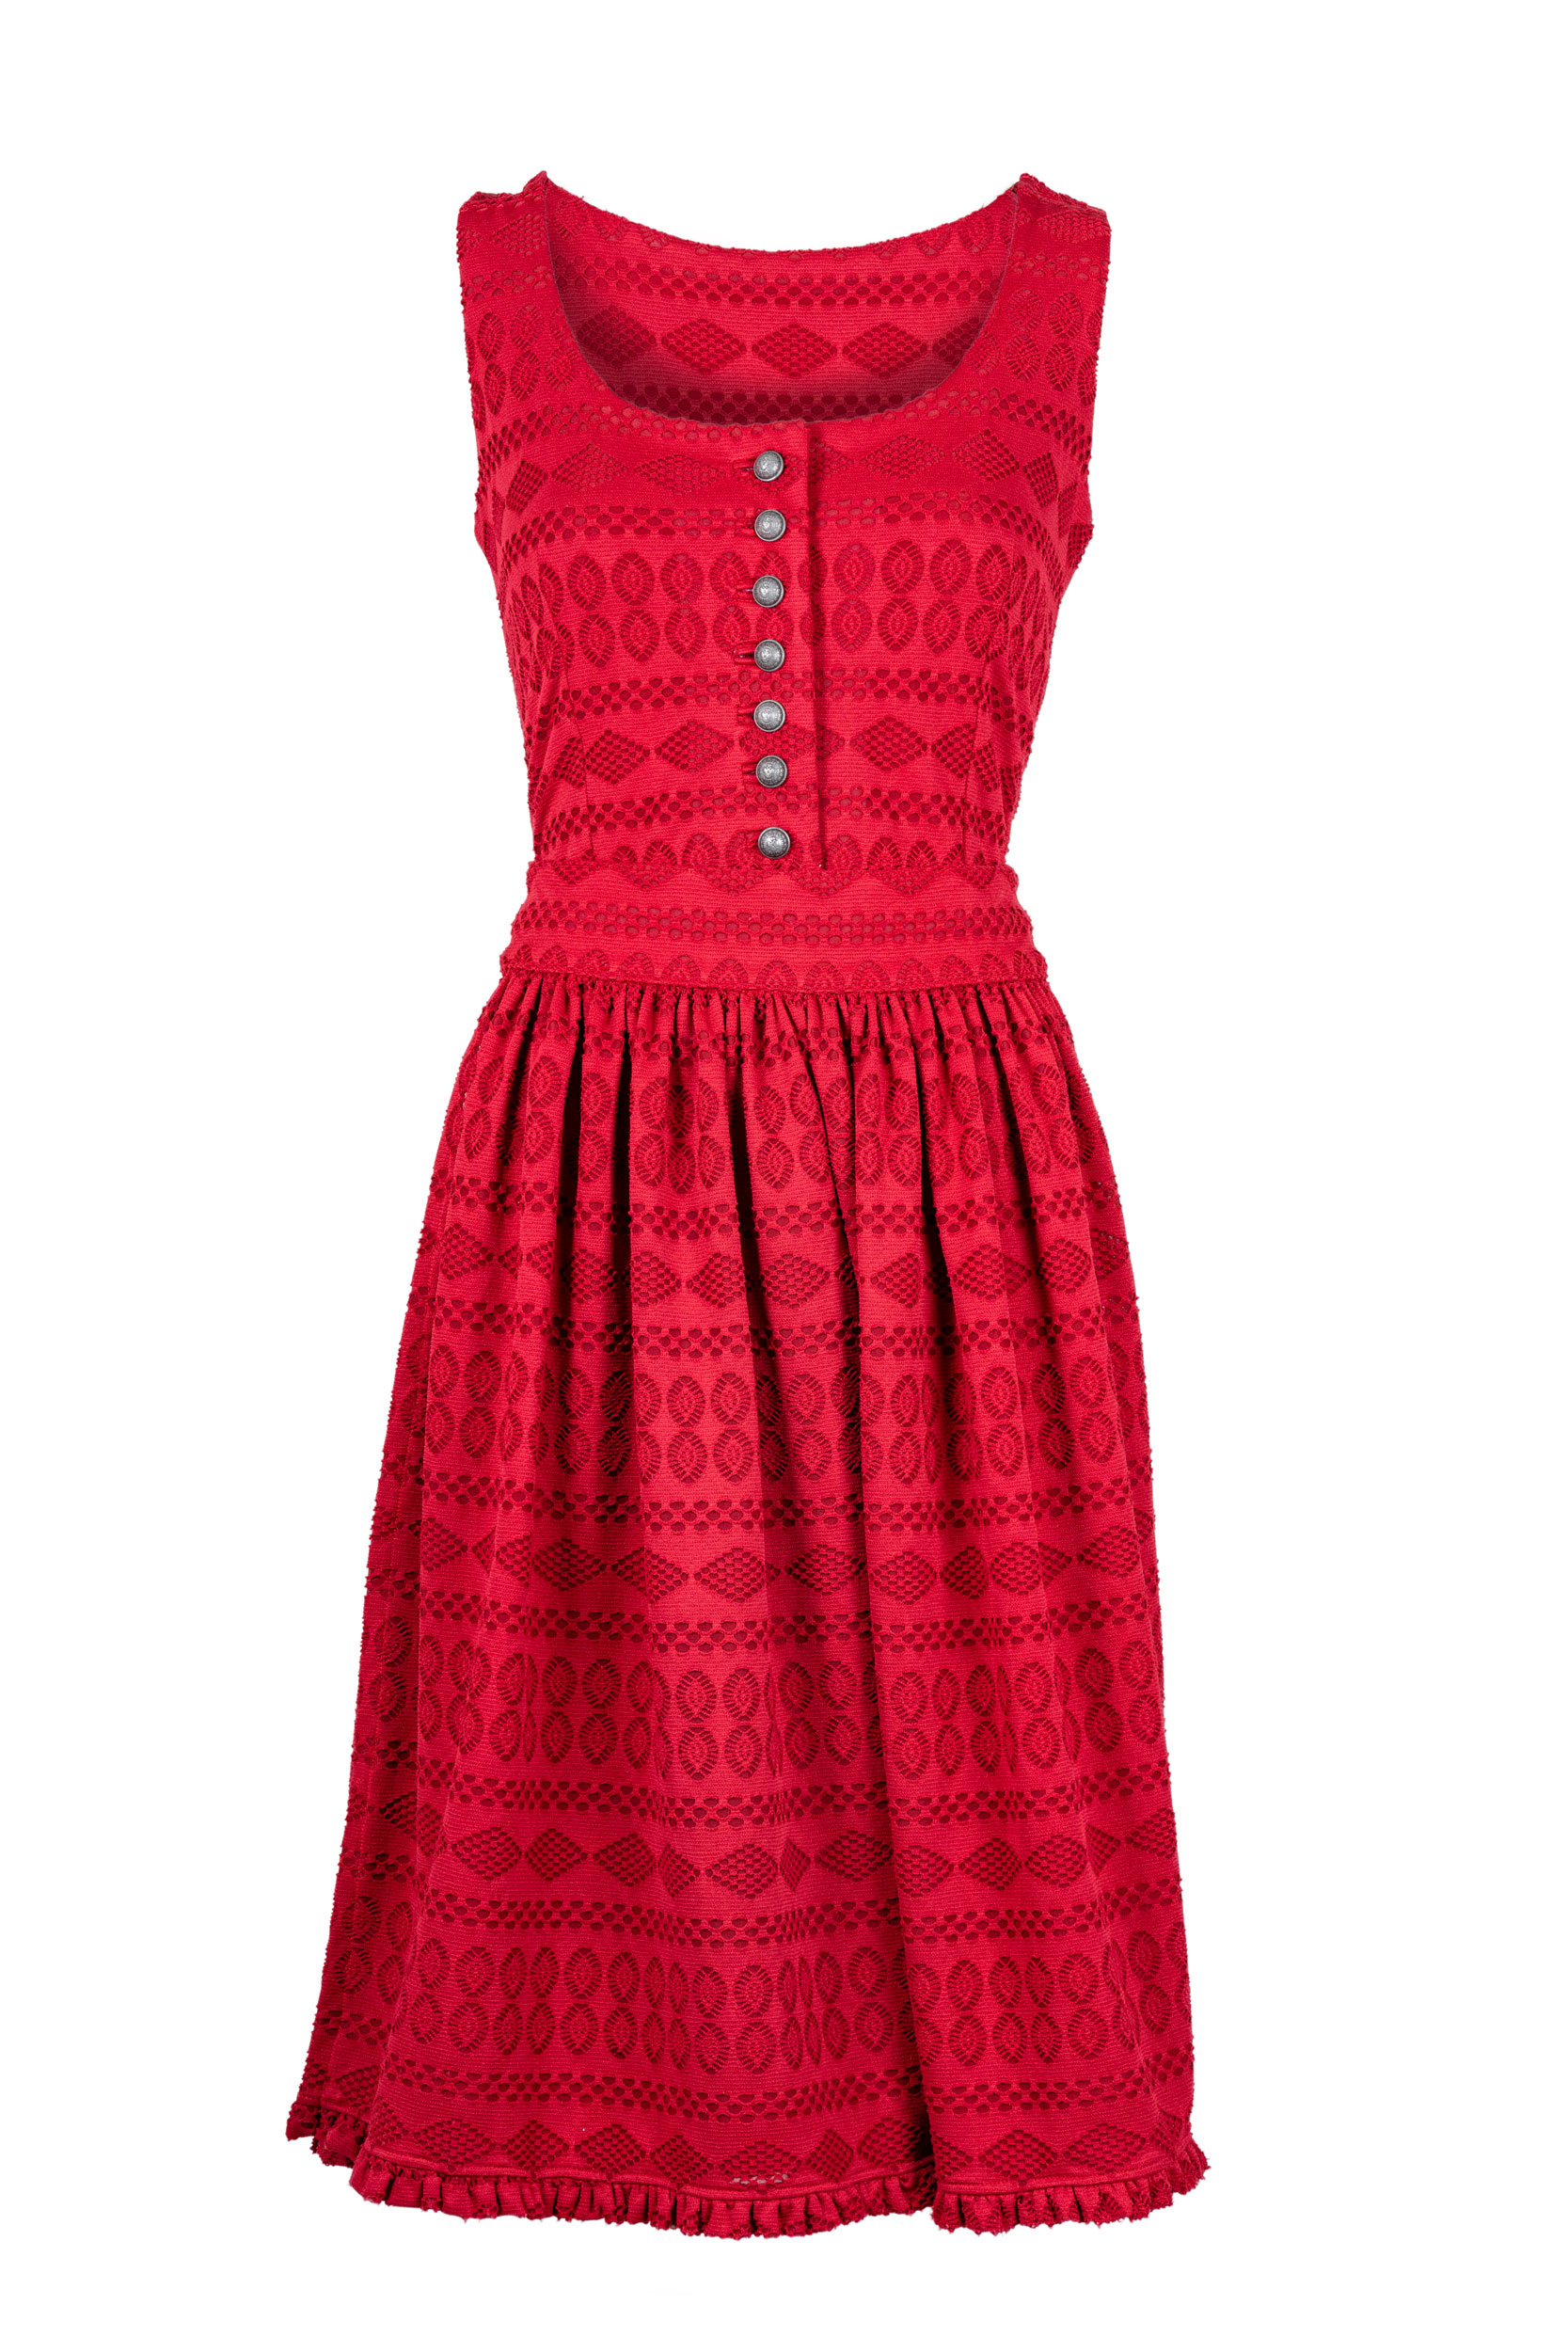 Damen-Dirndl-wash&wear-Jersey-Spitze-Scarlet-rot-vorne